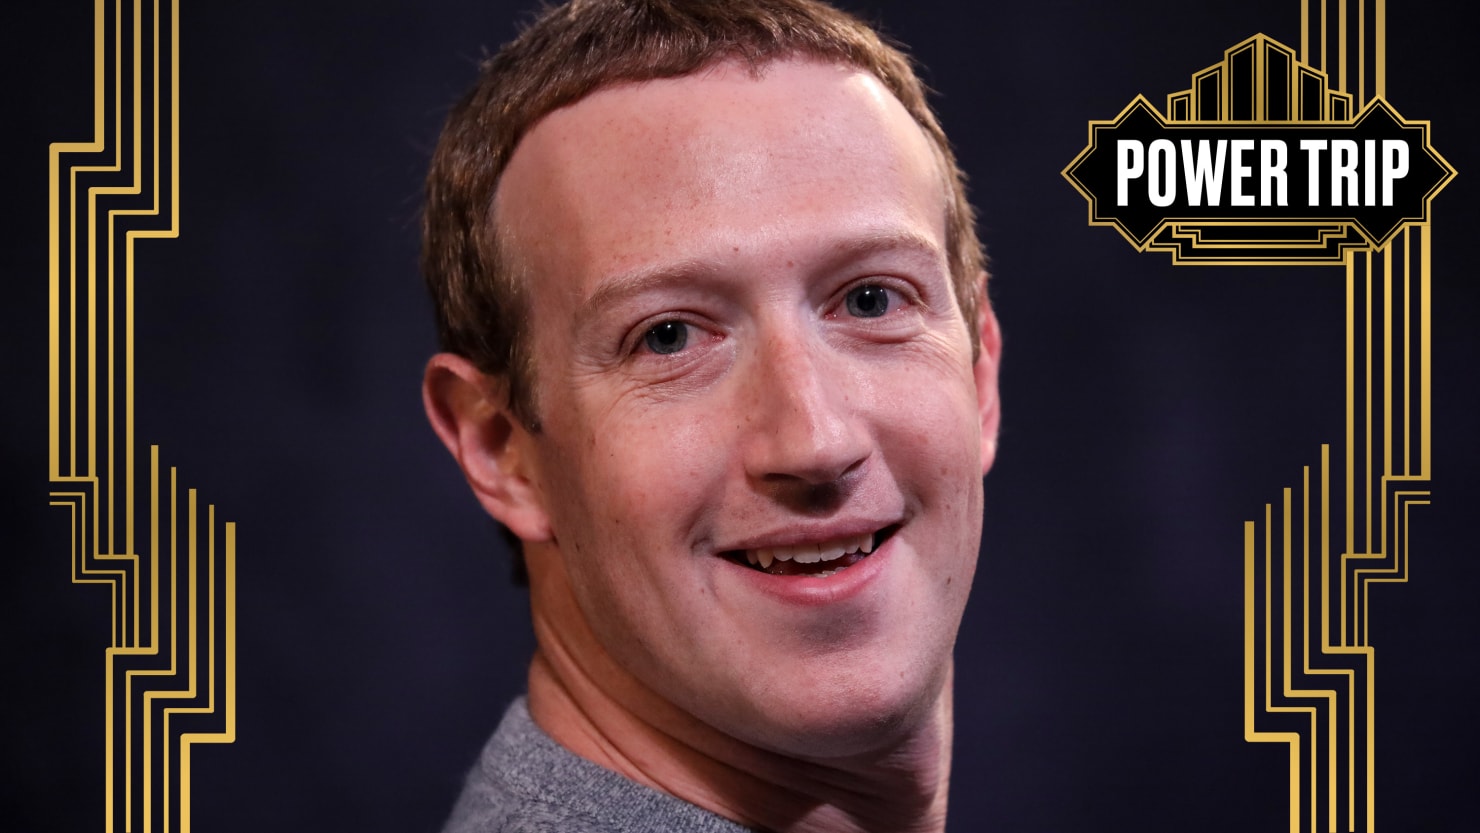 Mark Zuckerberg dévore un autre grand morceau de front de mer hawaïen